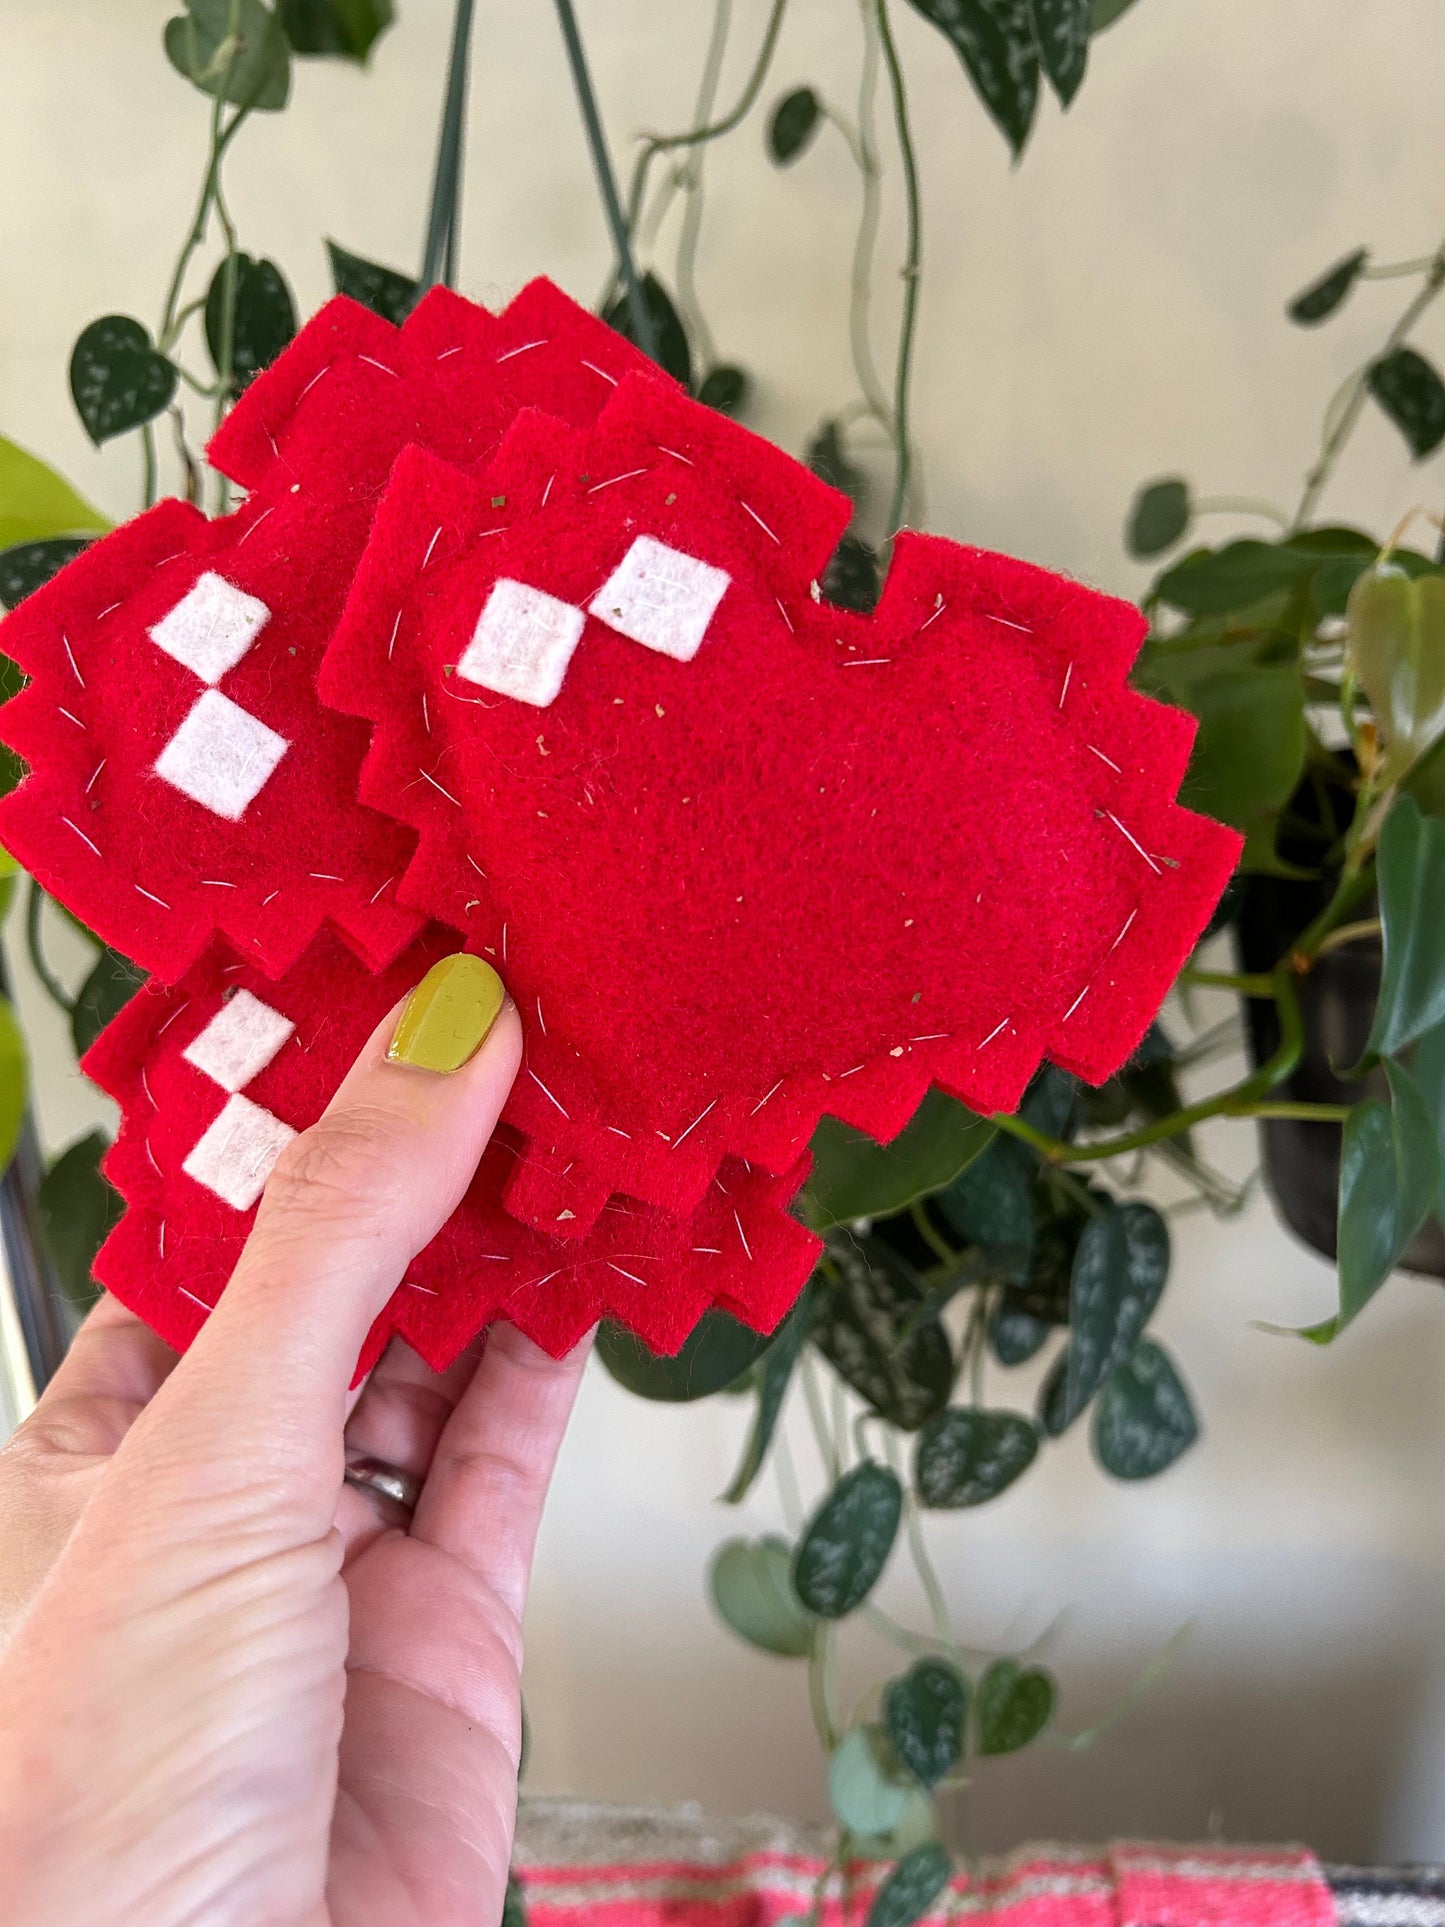 Video game pixelated heart catnip cat toy